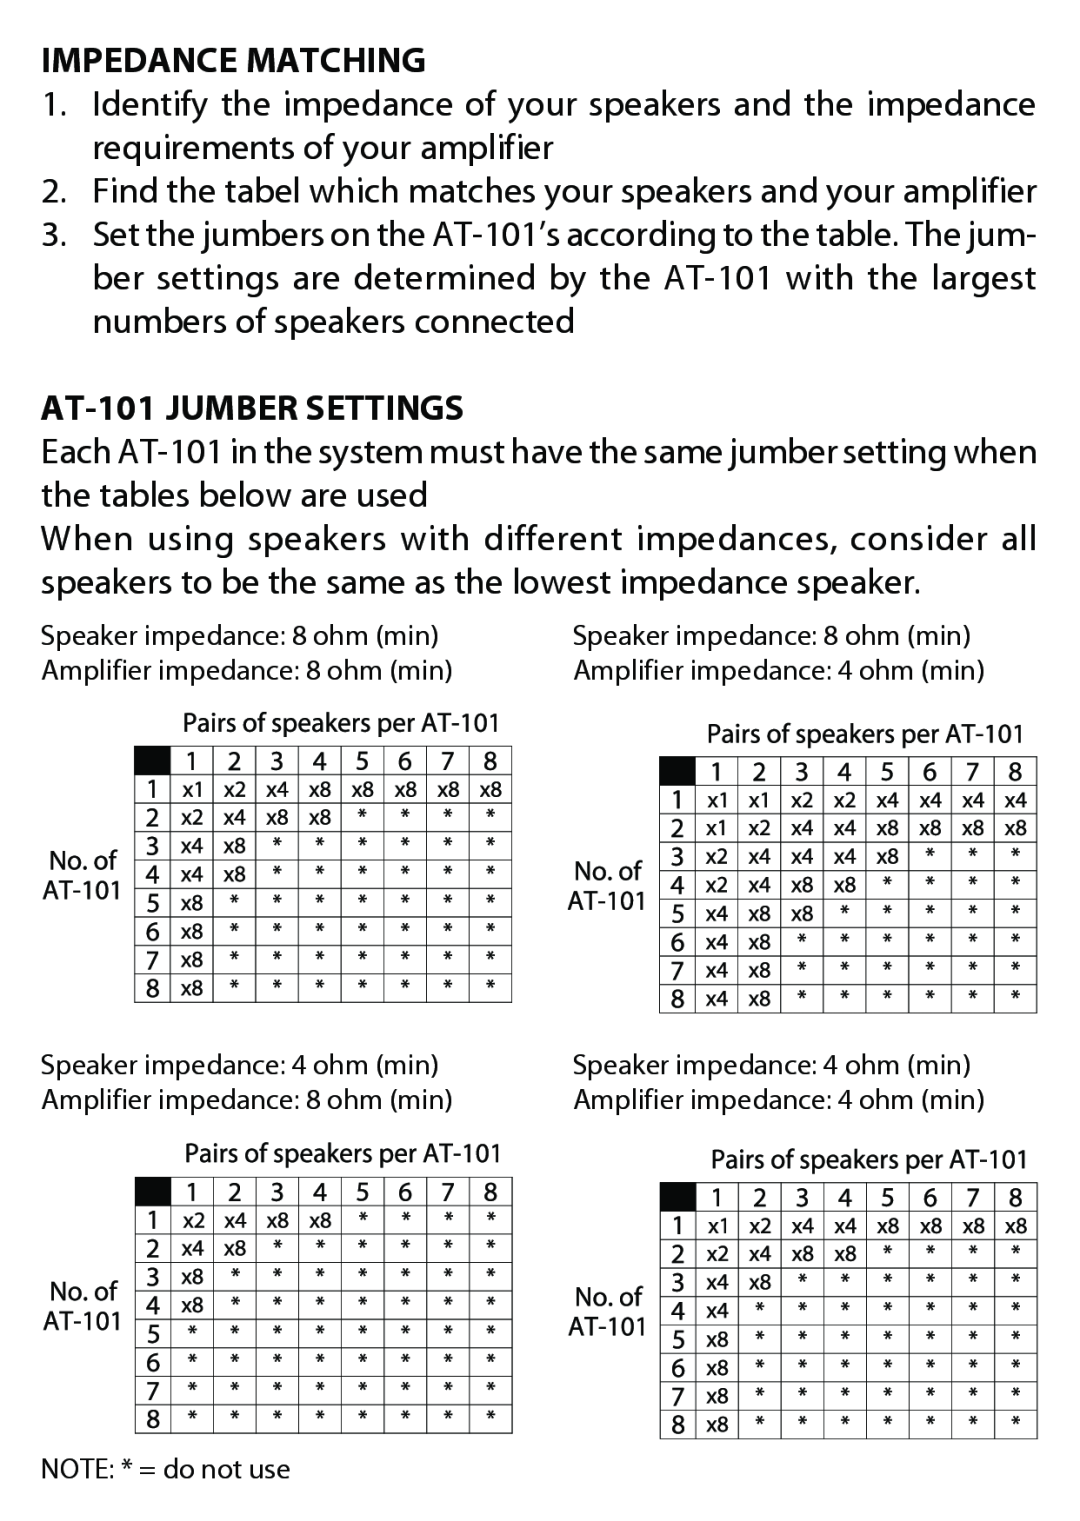 JAMO AT101 manual Impedance Matching, AT-101JUMBER SETTINGS 